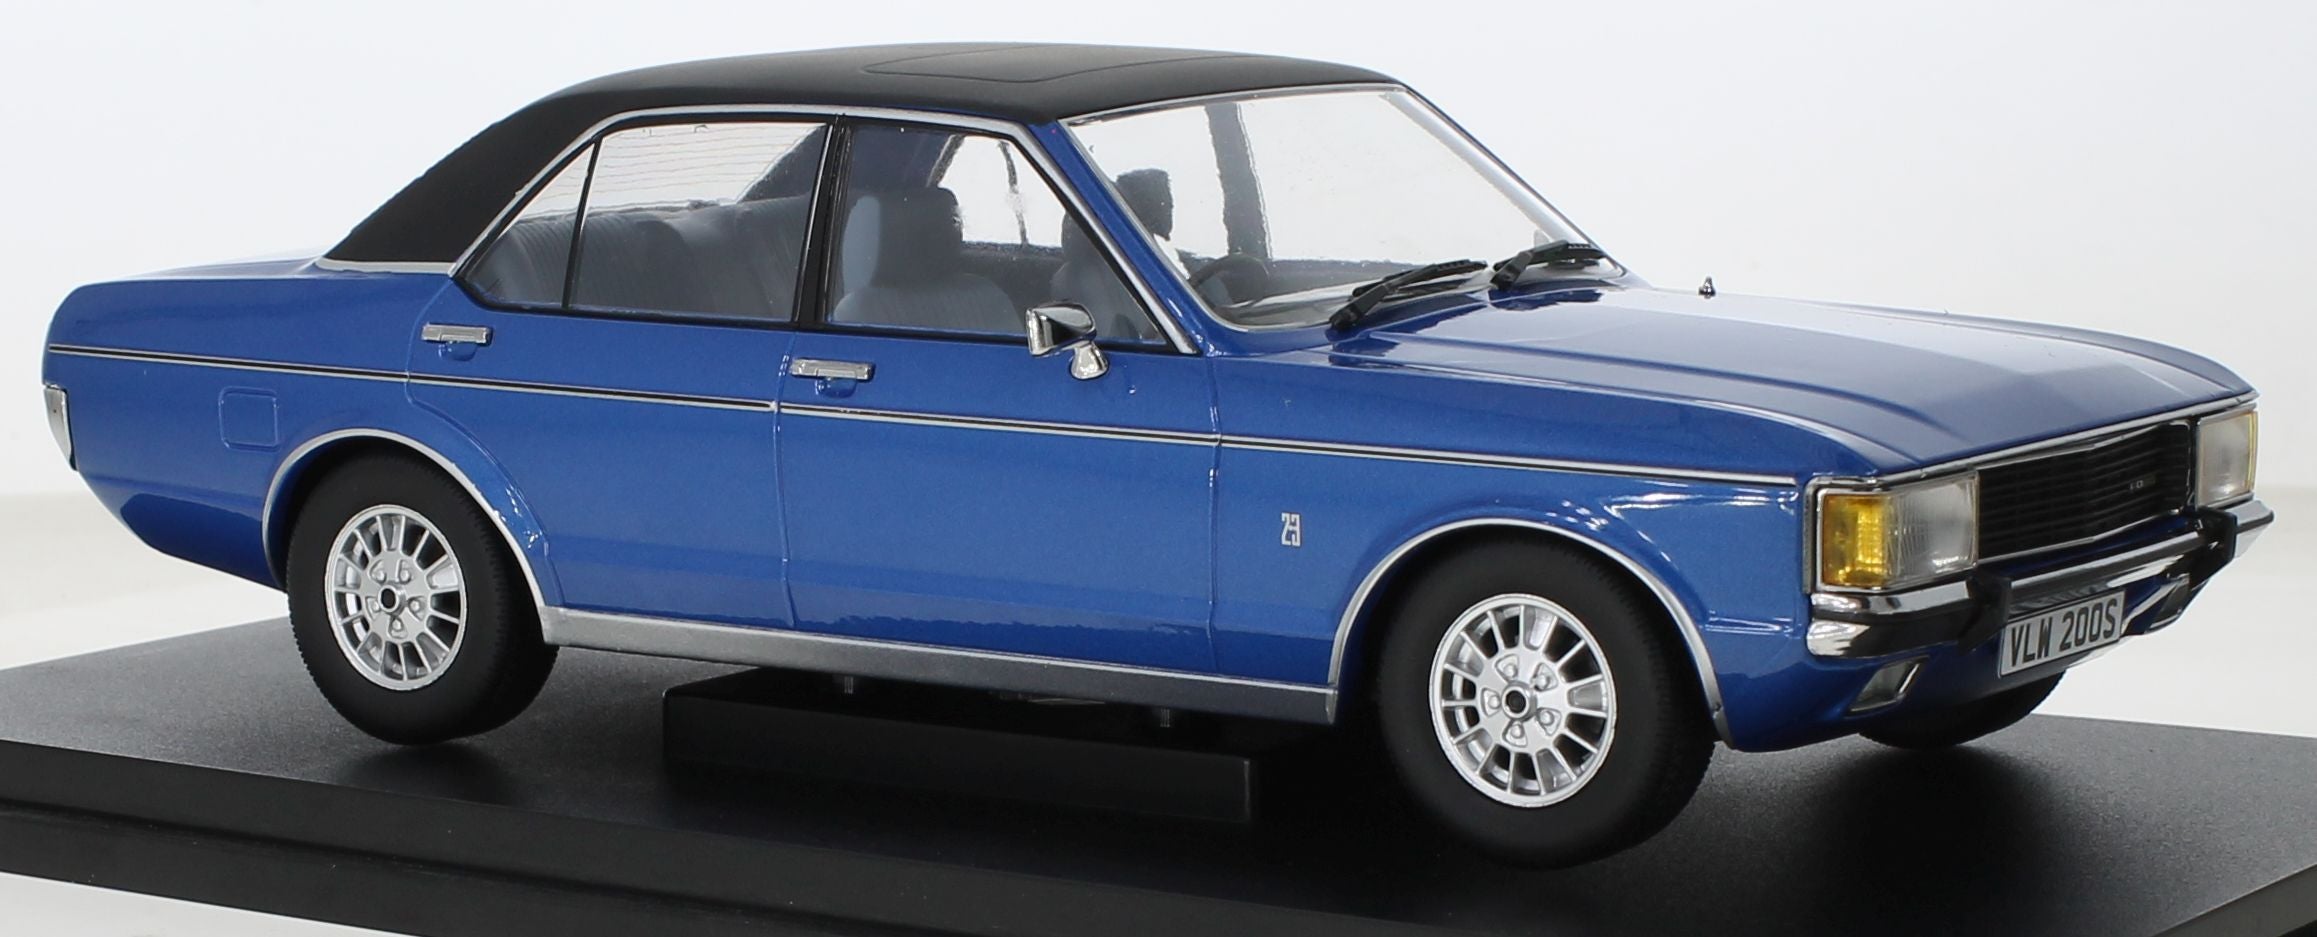 Ford Granada MK1 1975 blue/matt black - 1:18 Scale Diecast Model Car